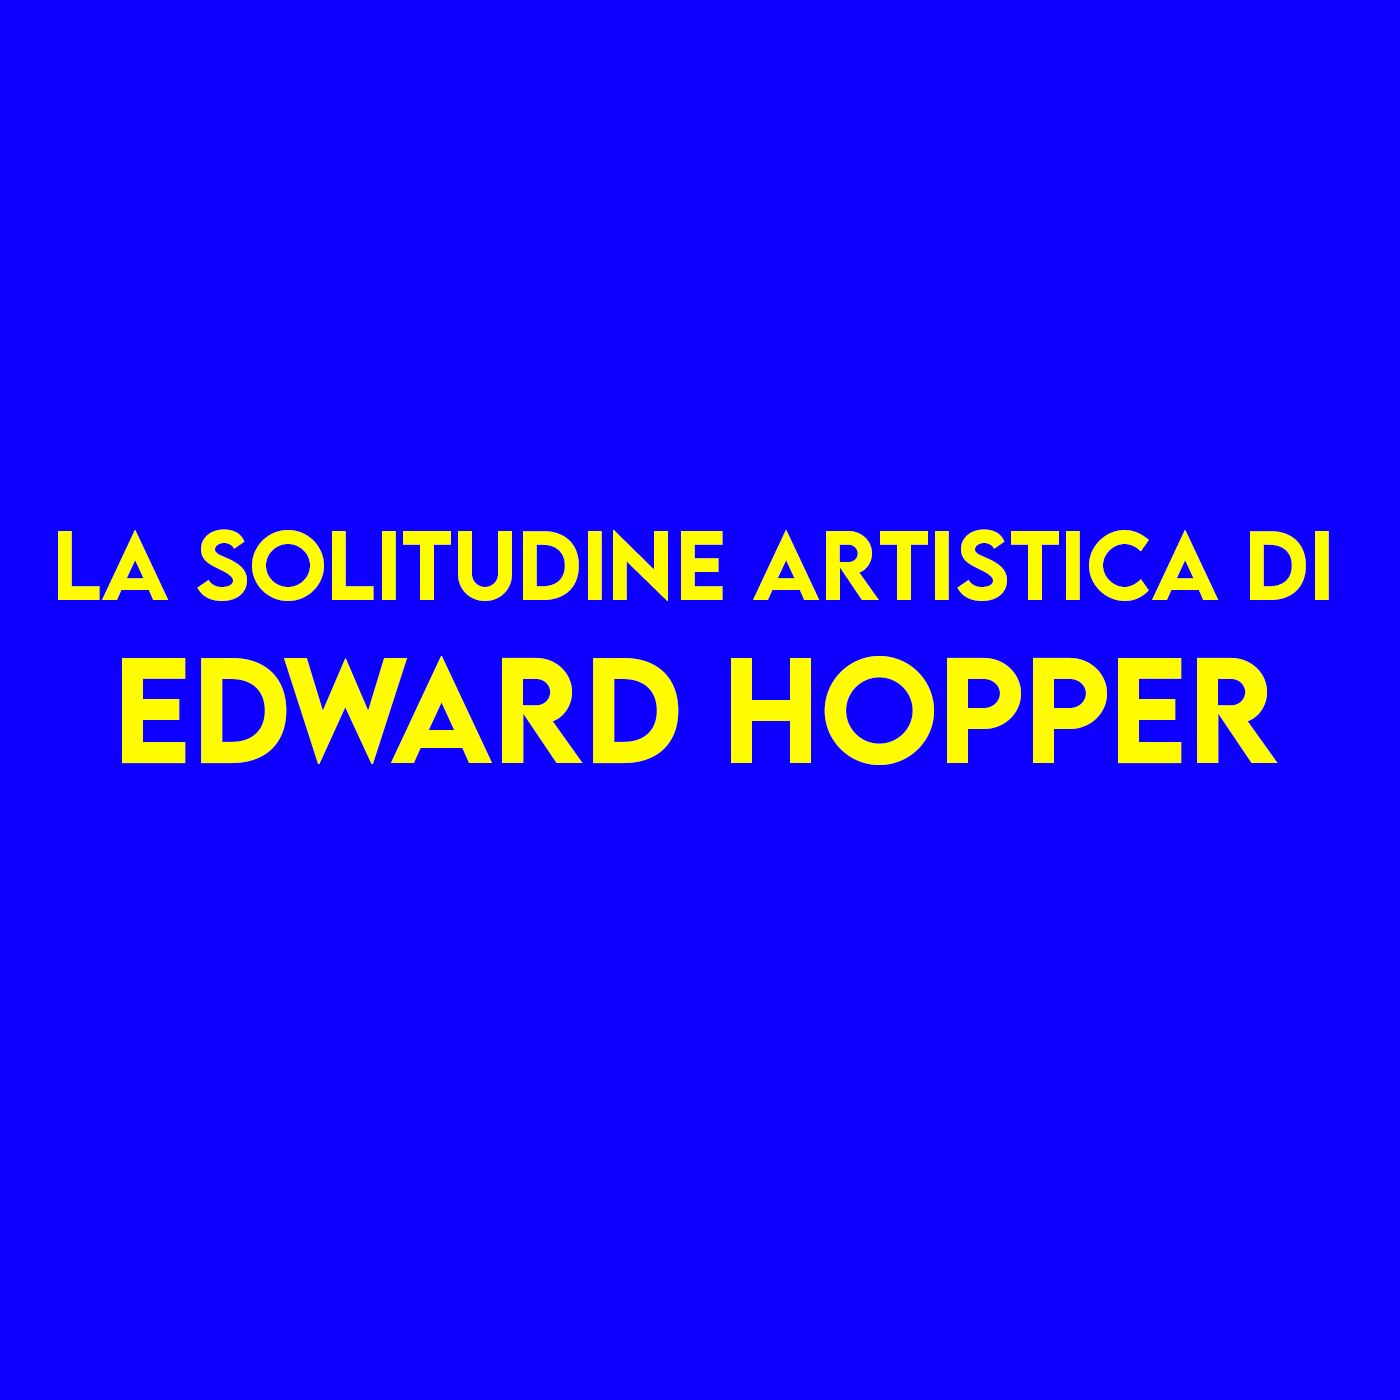 La Solitudine artistica di Edward Hopper